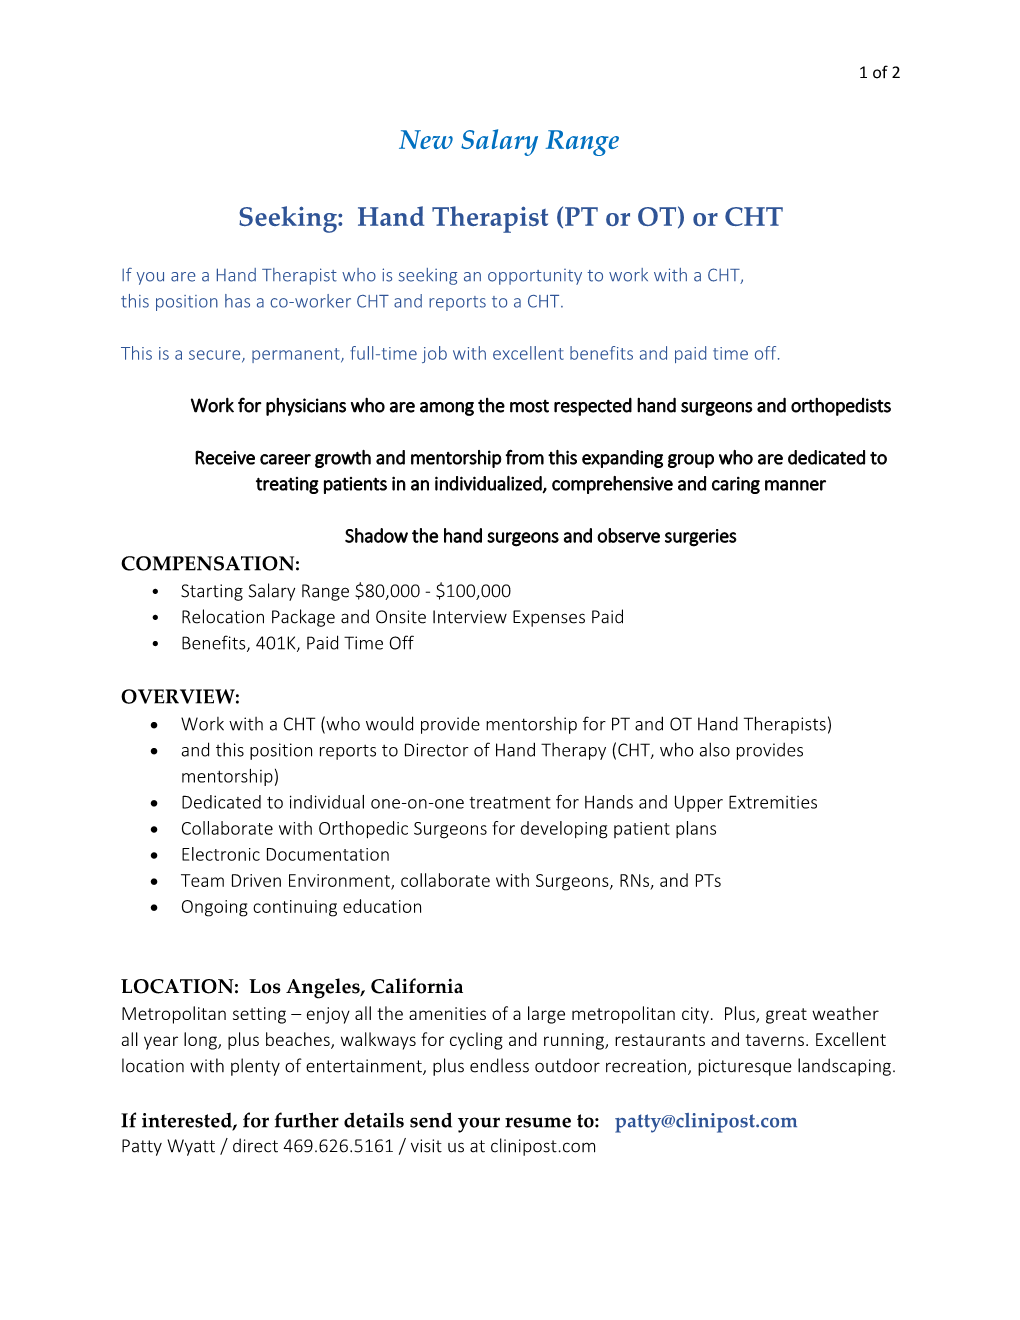 Seeking: Hand Therapist (PT Or OT) Or CHT